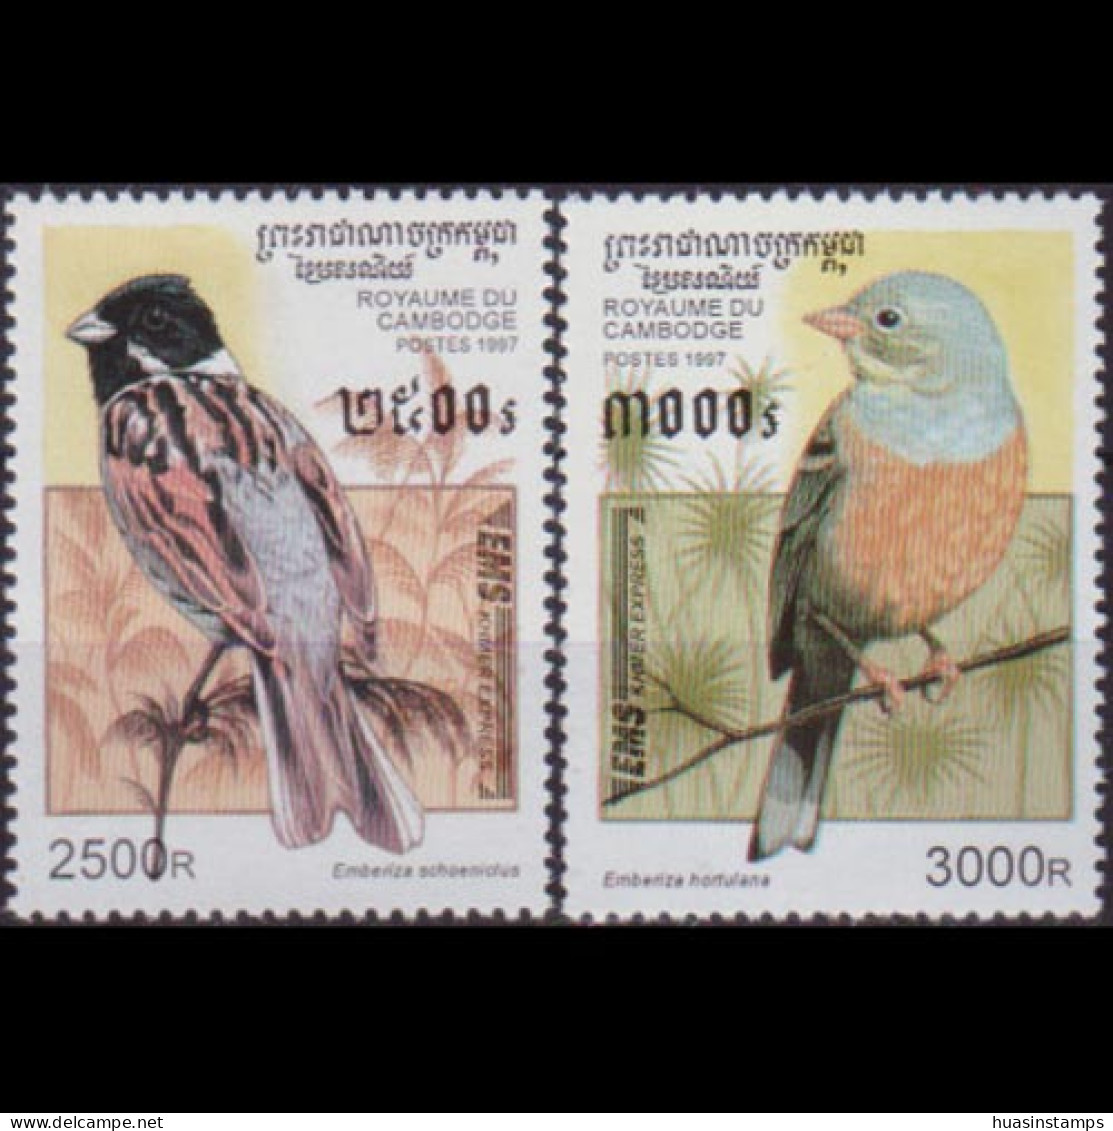 CAMBODIA 1997 - Scott# 1602-3 Birds 2500-3000r MNH - Cambodia